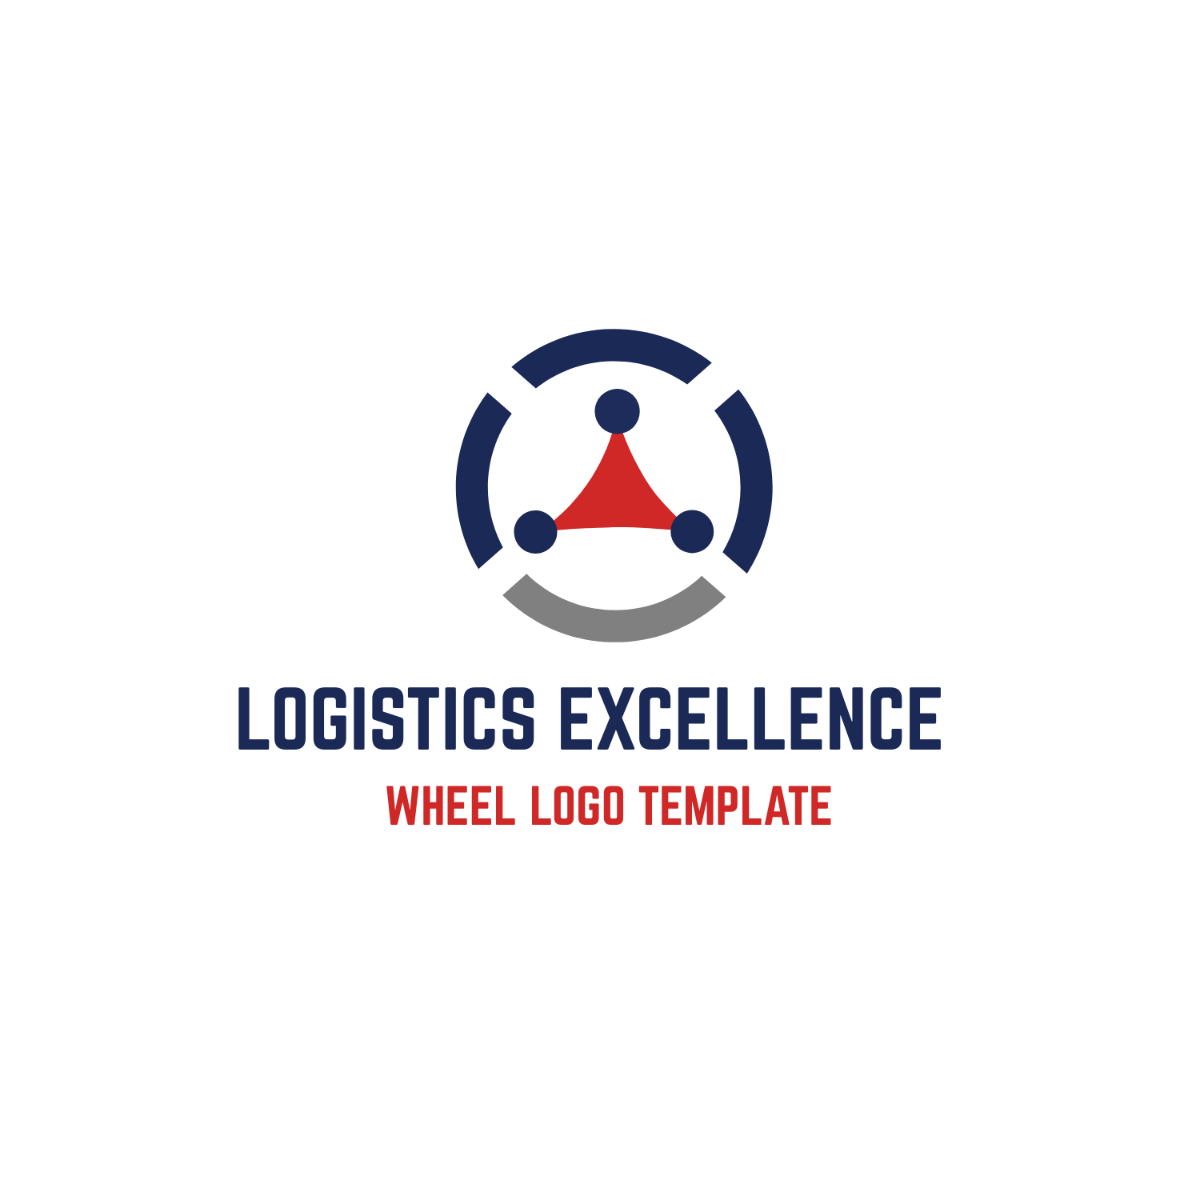 Logistics Excellence Wheel Logo Template